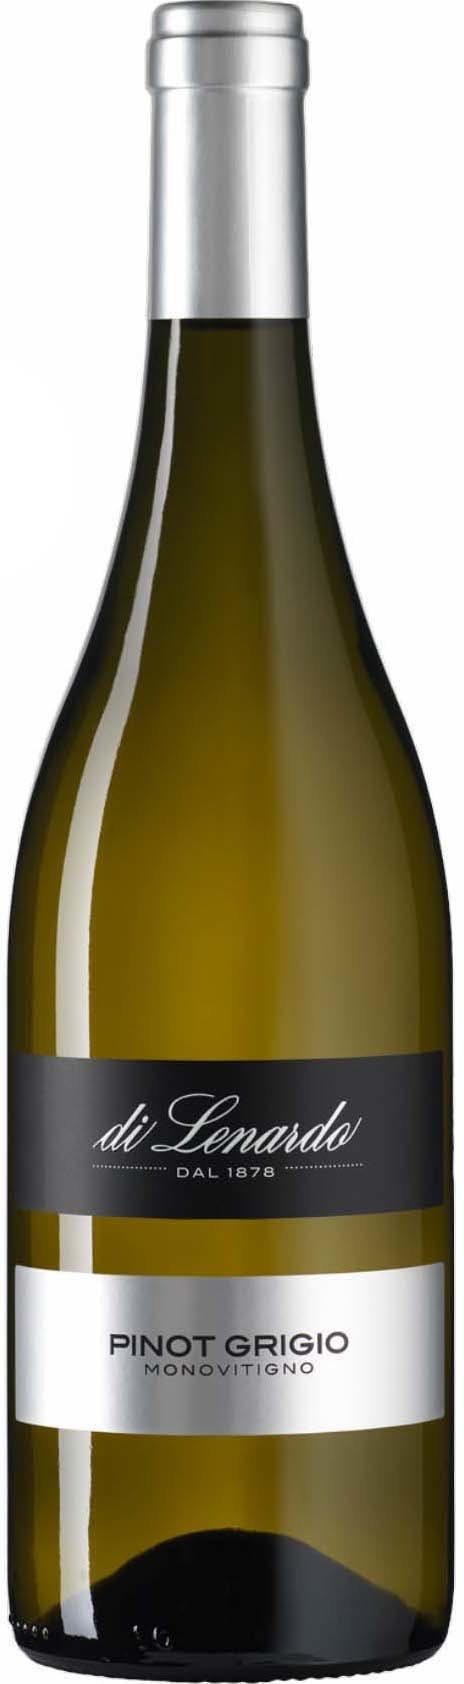 di Lenardo Pinot Grigio 2019 - Canaan Wine 750ml New